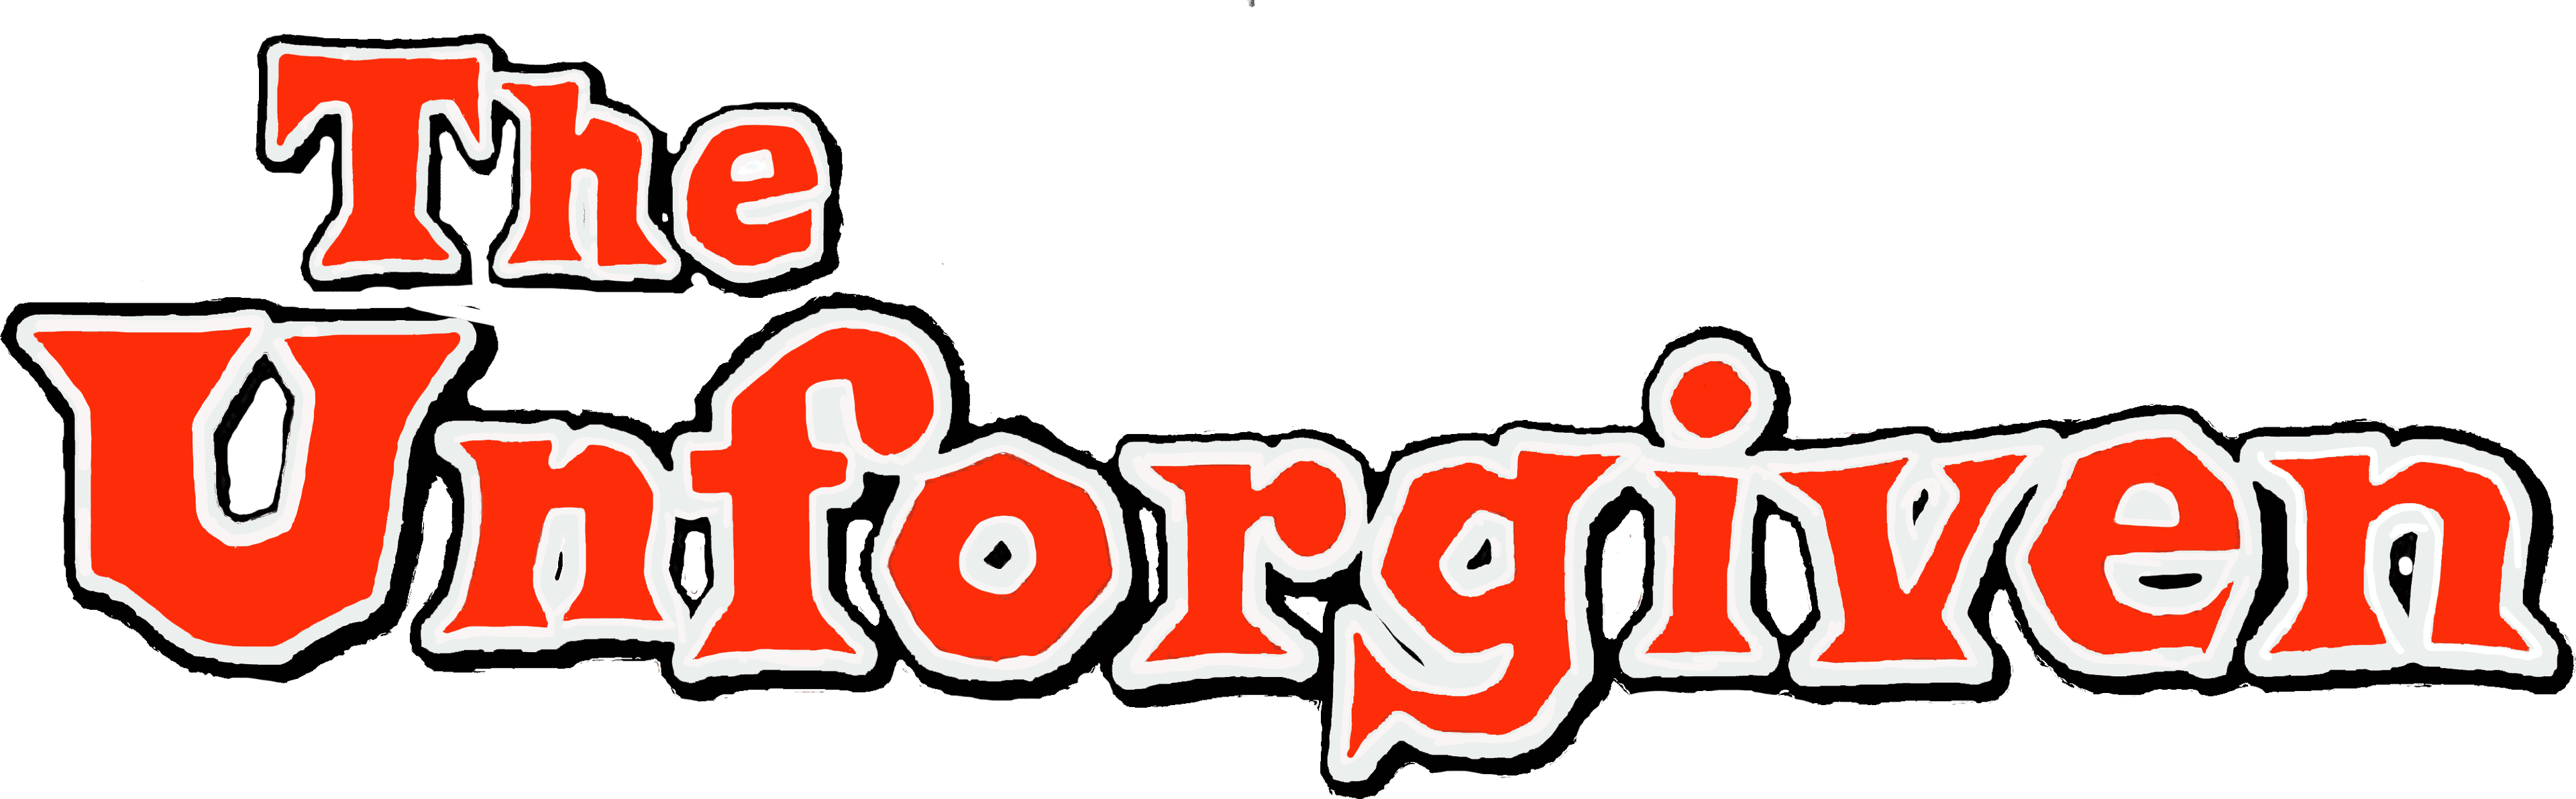 The Unforgiven logo